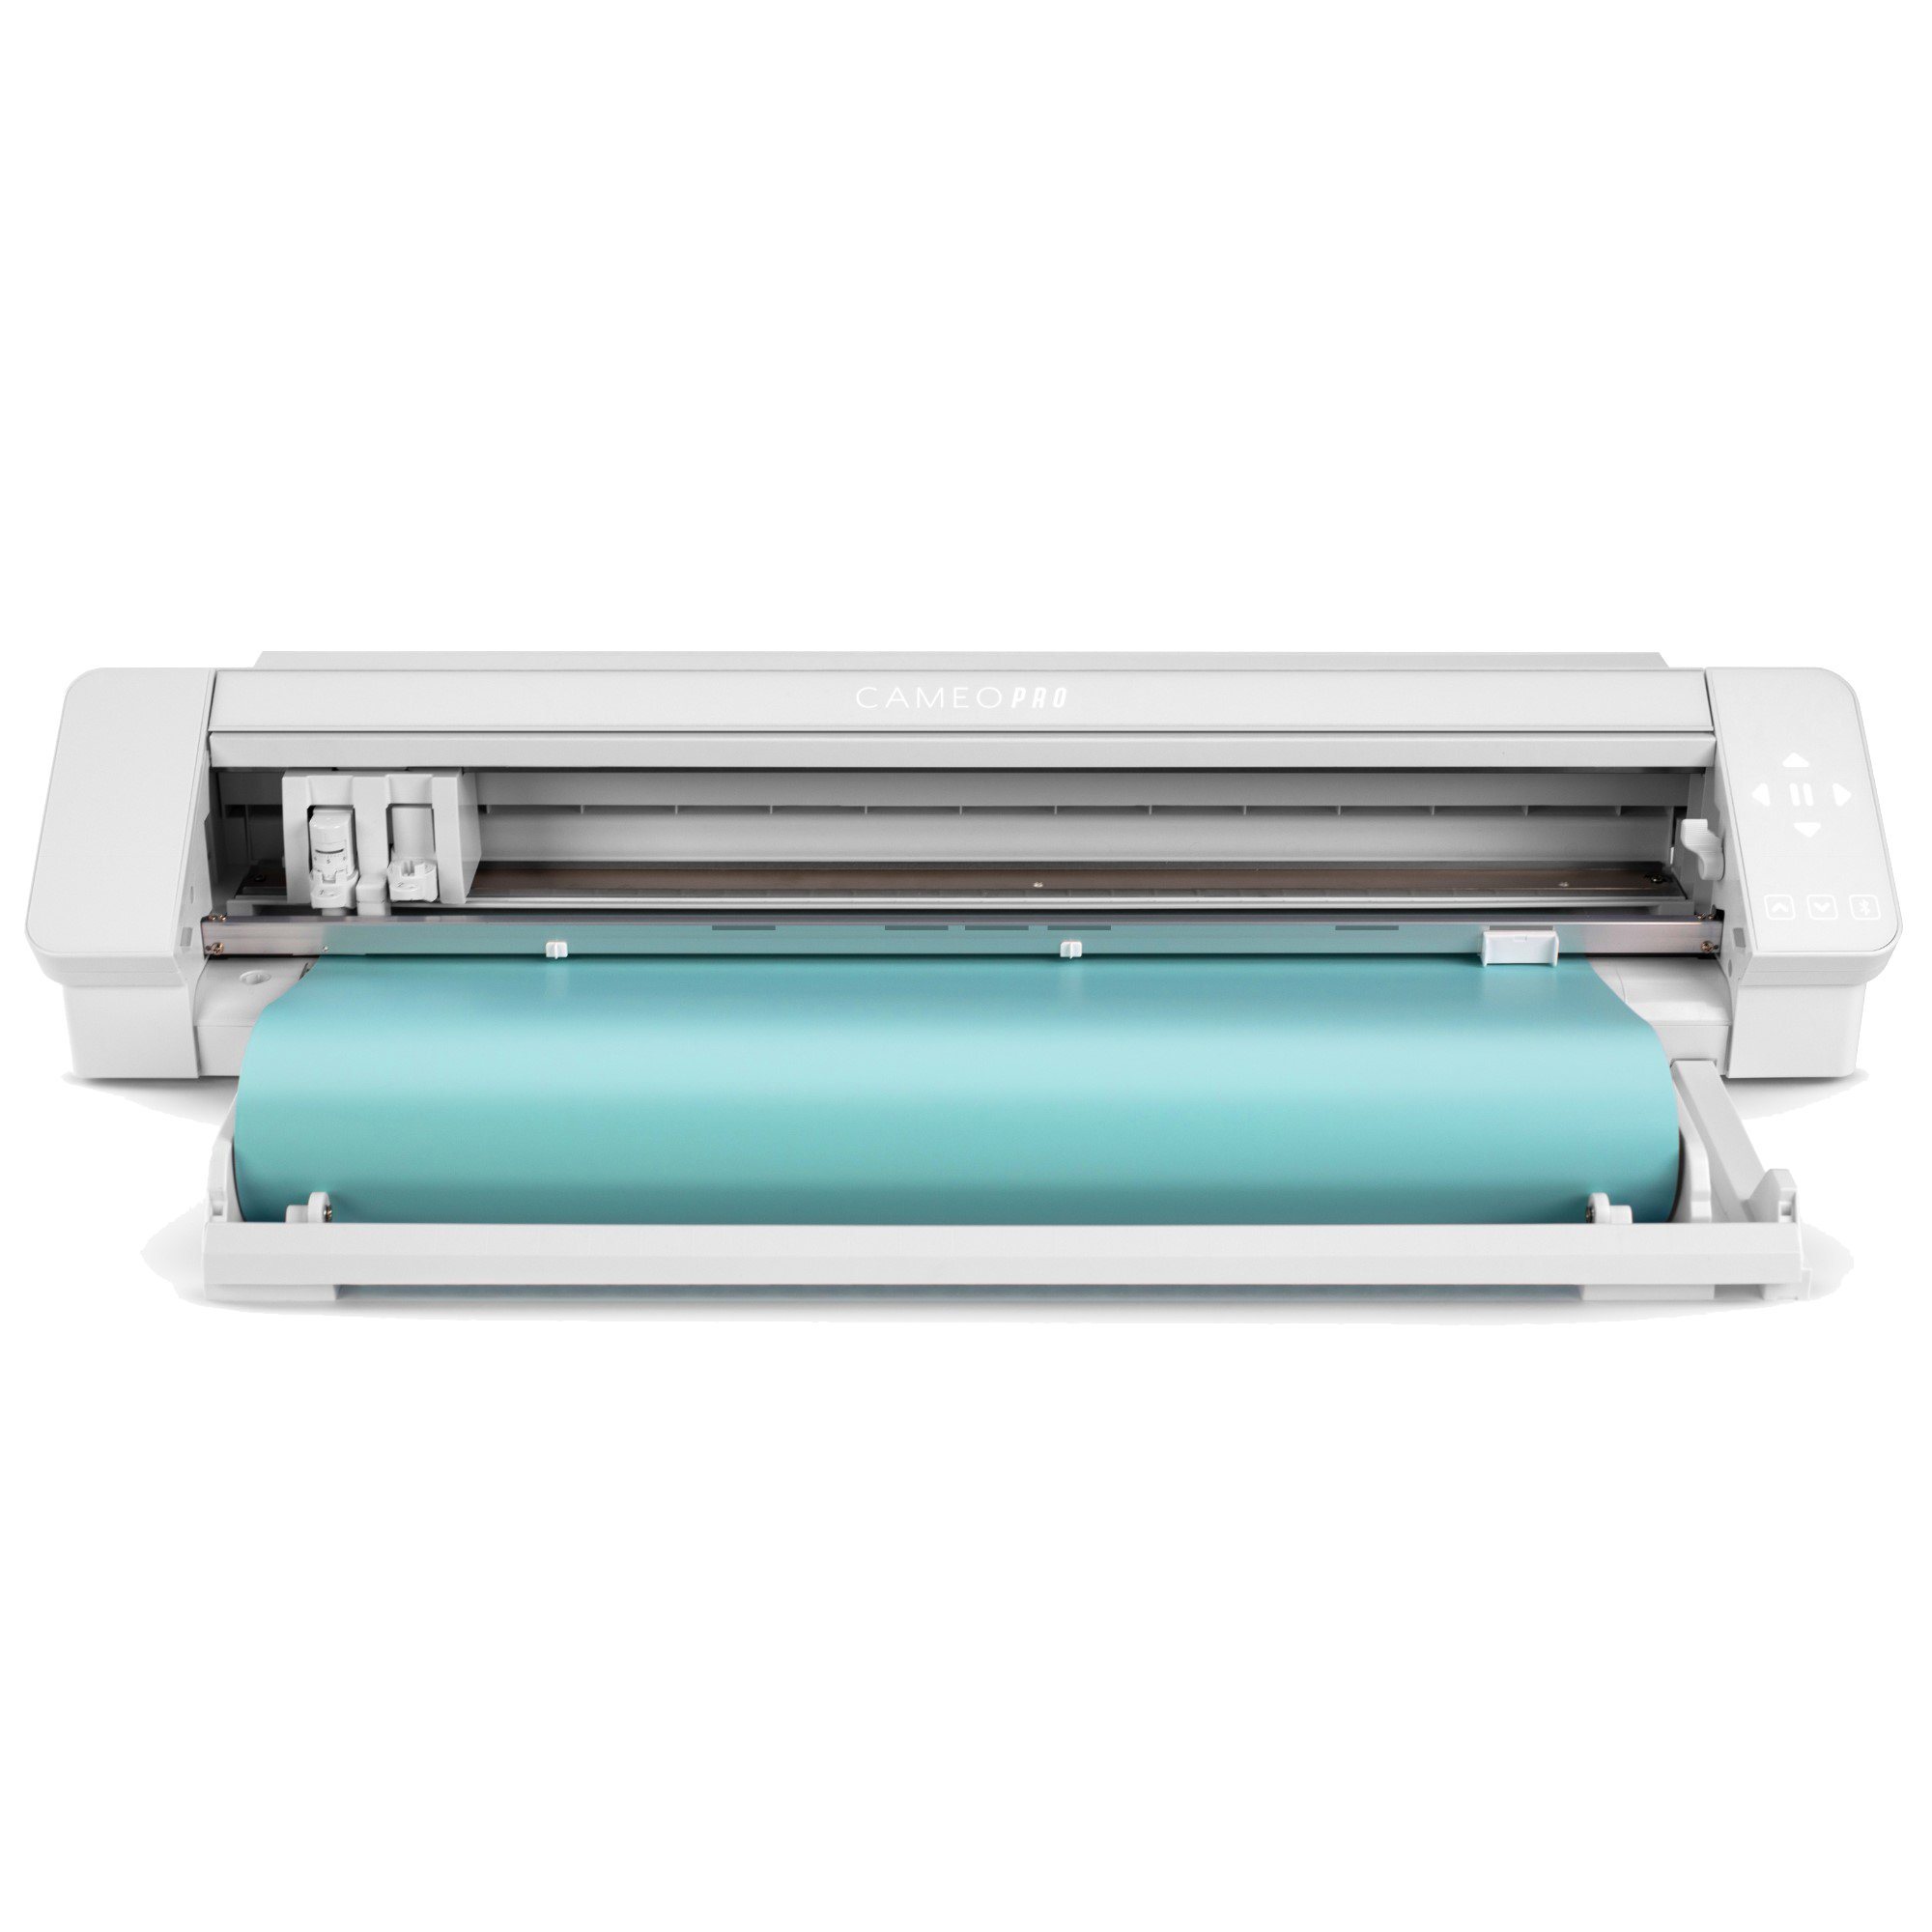 Sawgrass UHD Virtuoso SG500 Sublimation Printer & Cameo 4 Plus 15 Bundle - Starter Ink Set - 20ml